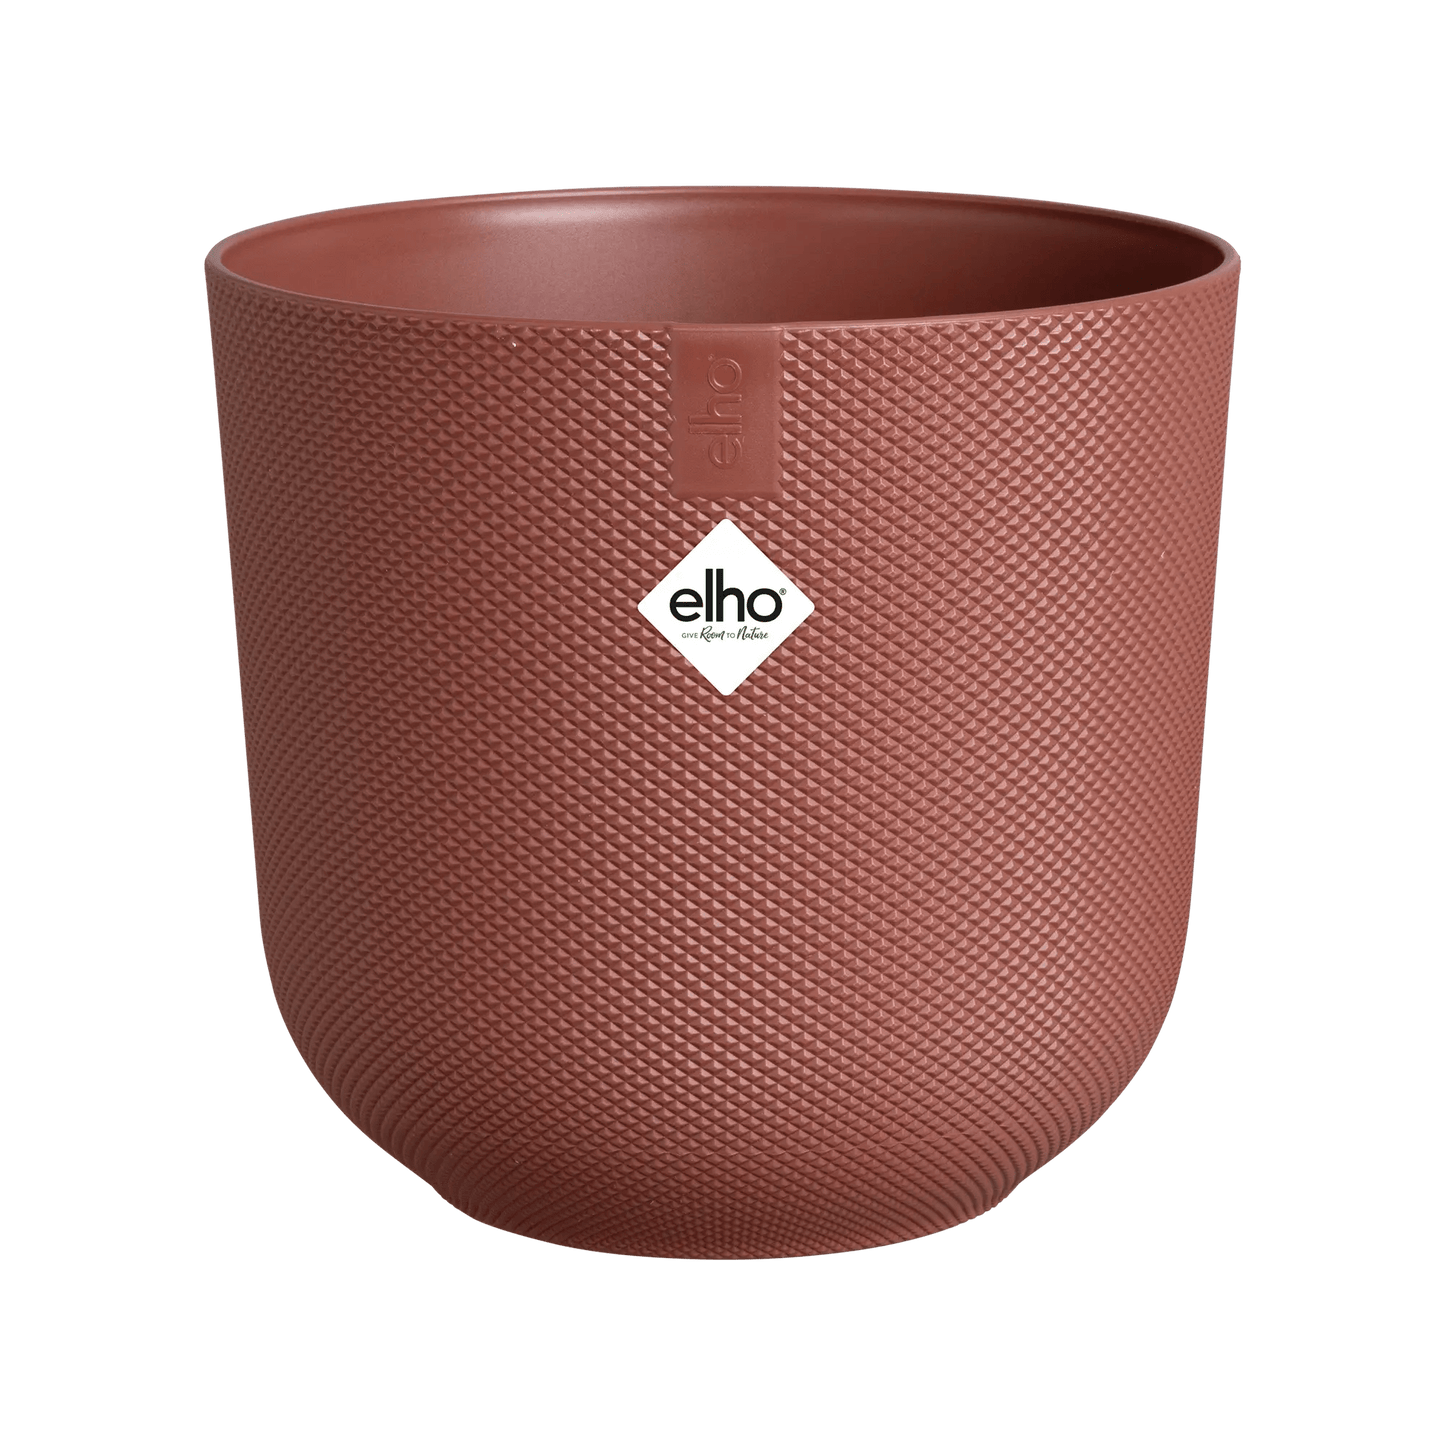 Elho Plant Pot Tuscan Red Recycled Plastic Plant Pot - Jazz Round (multiple sizes)